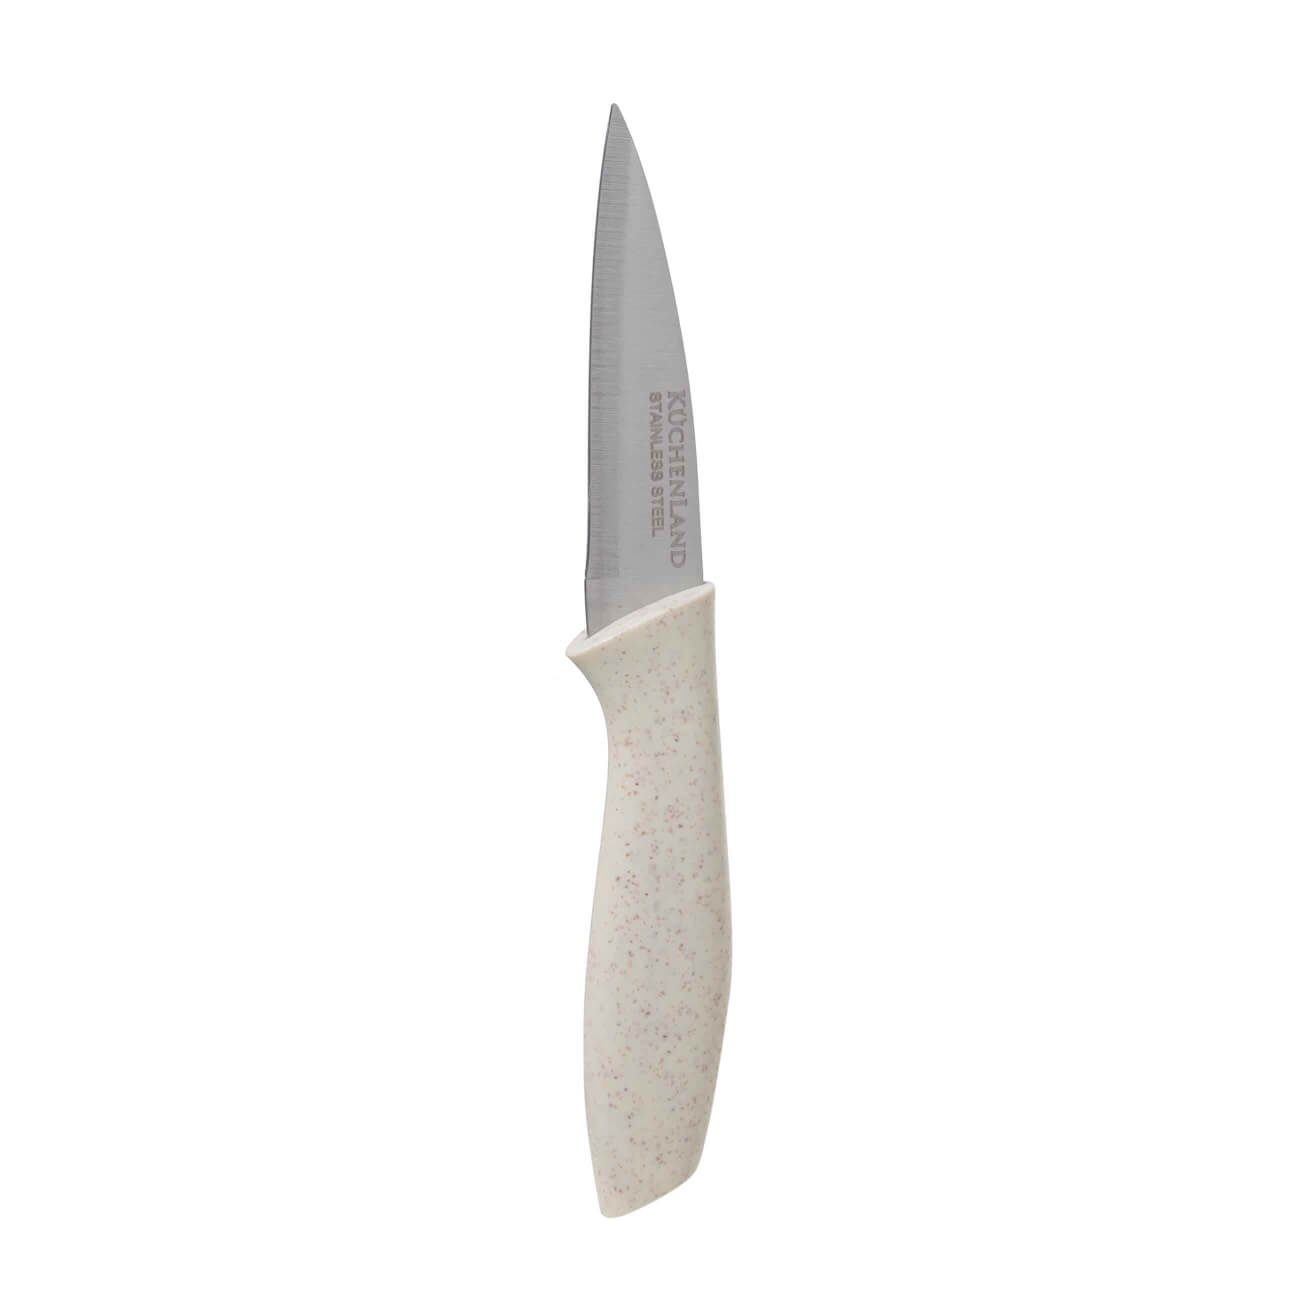 Нож для чистки овощей, 9 см, сталь/пластик, молочный, Speck-light кухонный нож для овощей накири western knife tojiro f 310 сталь vg 10 в картонной коробке